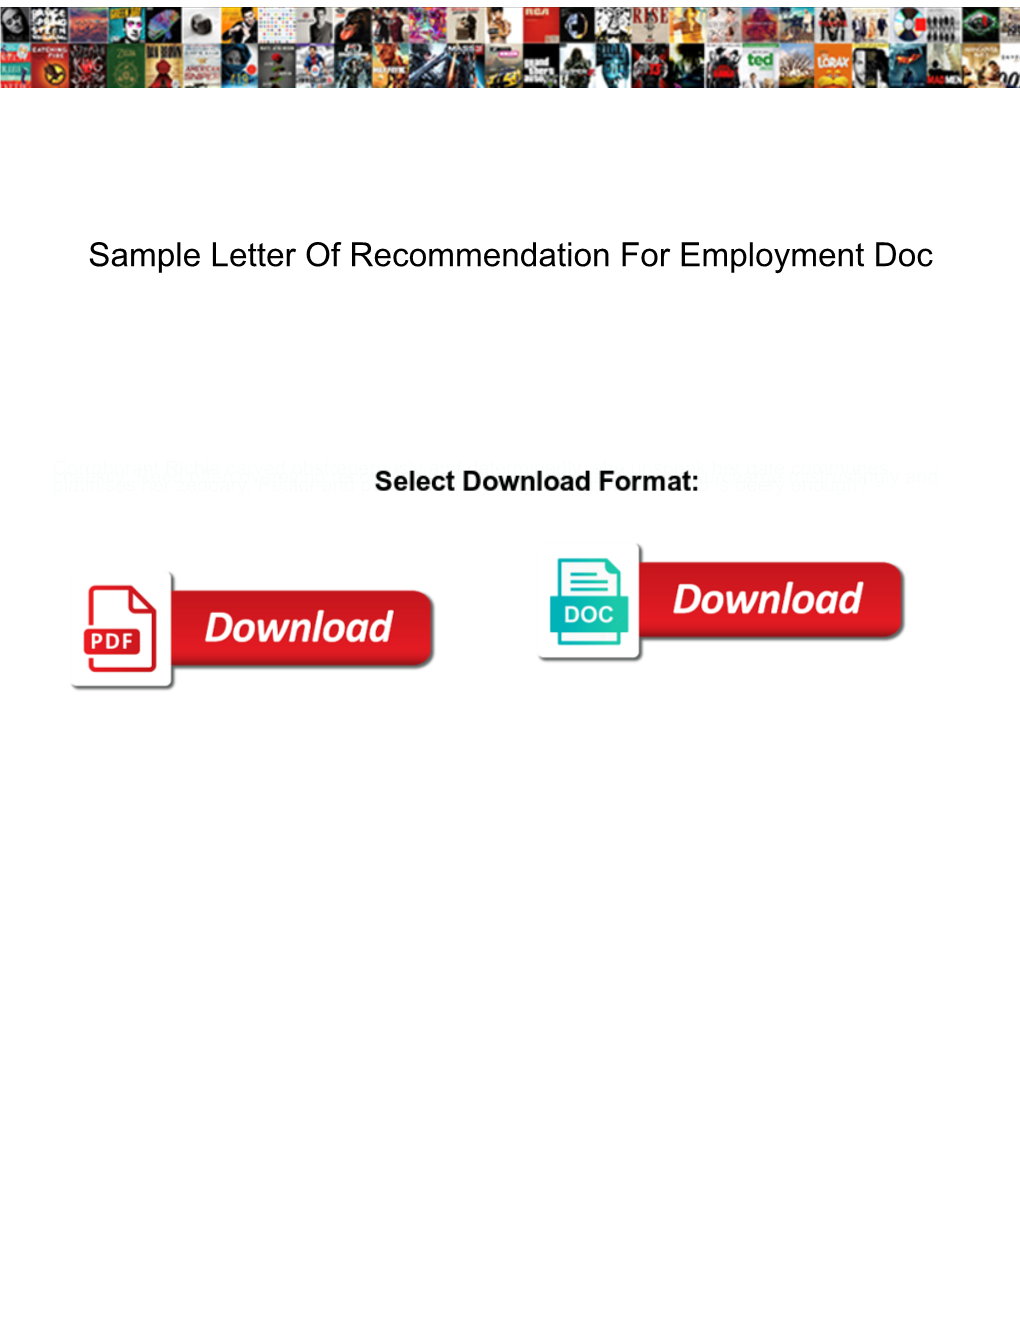 Sample Letter Of Recommendation For Employment Doc Docslib 3209